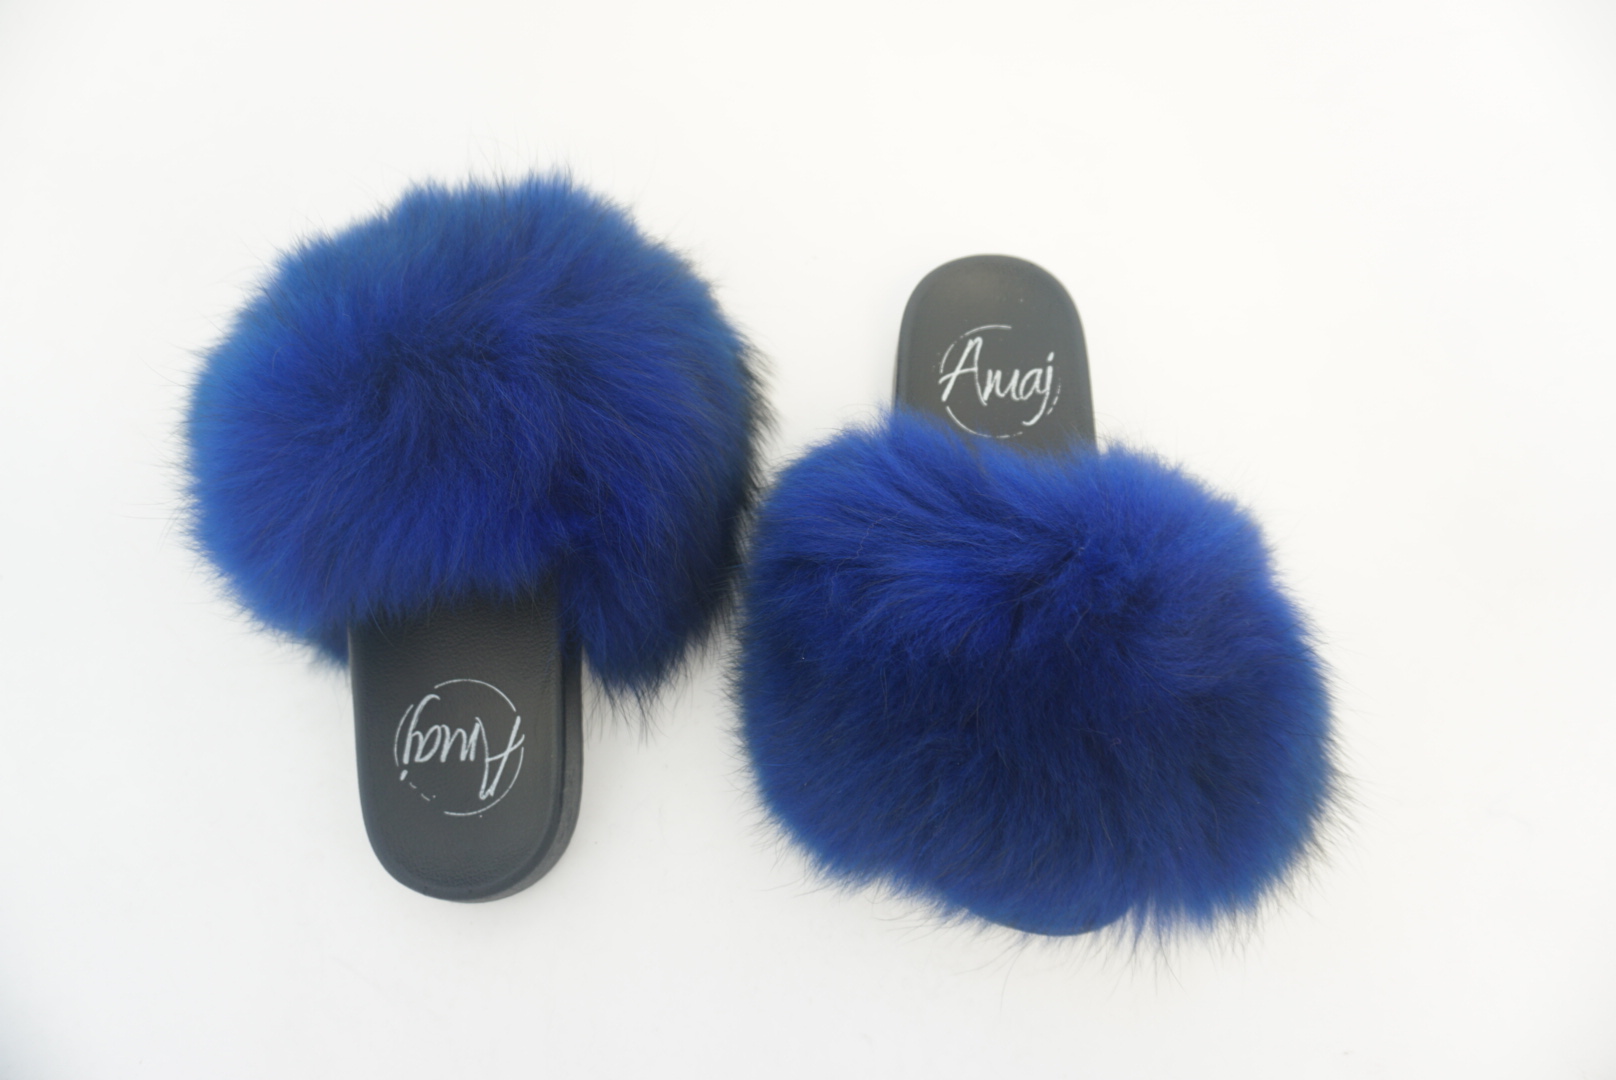 Mink Fur Slides, Shop The Largest Collection